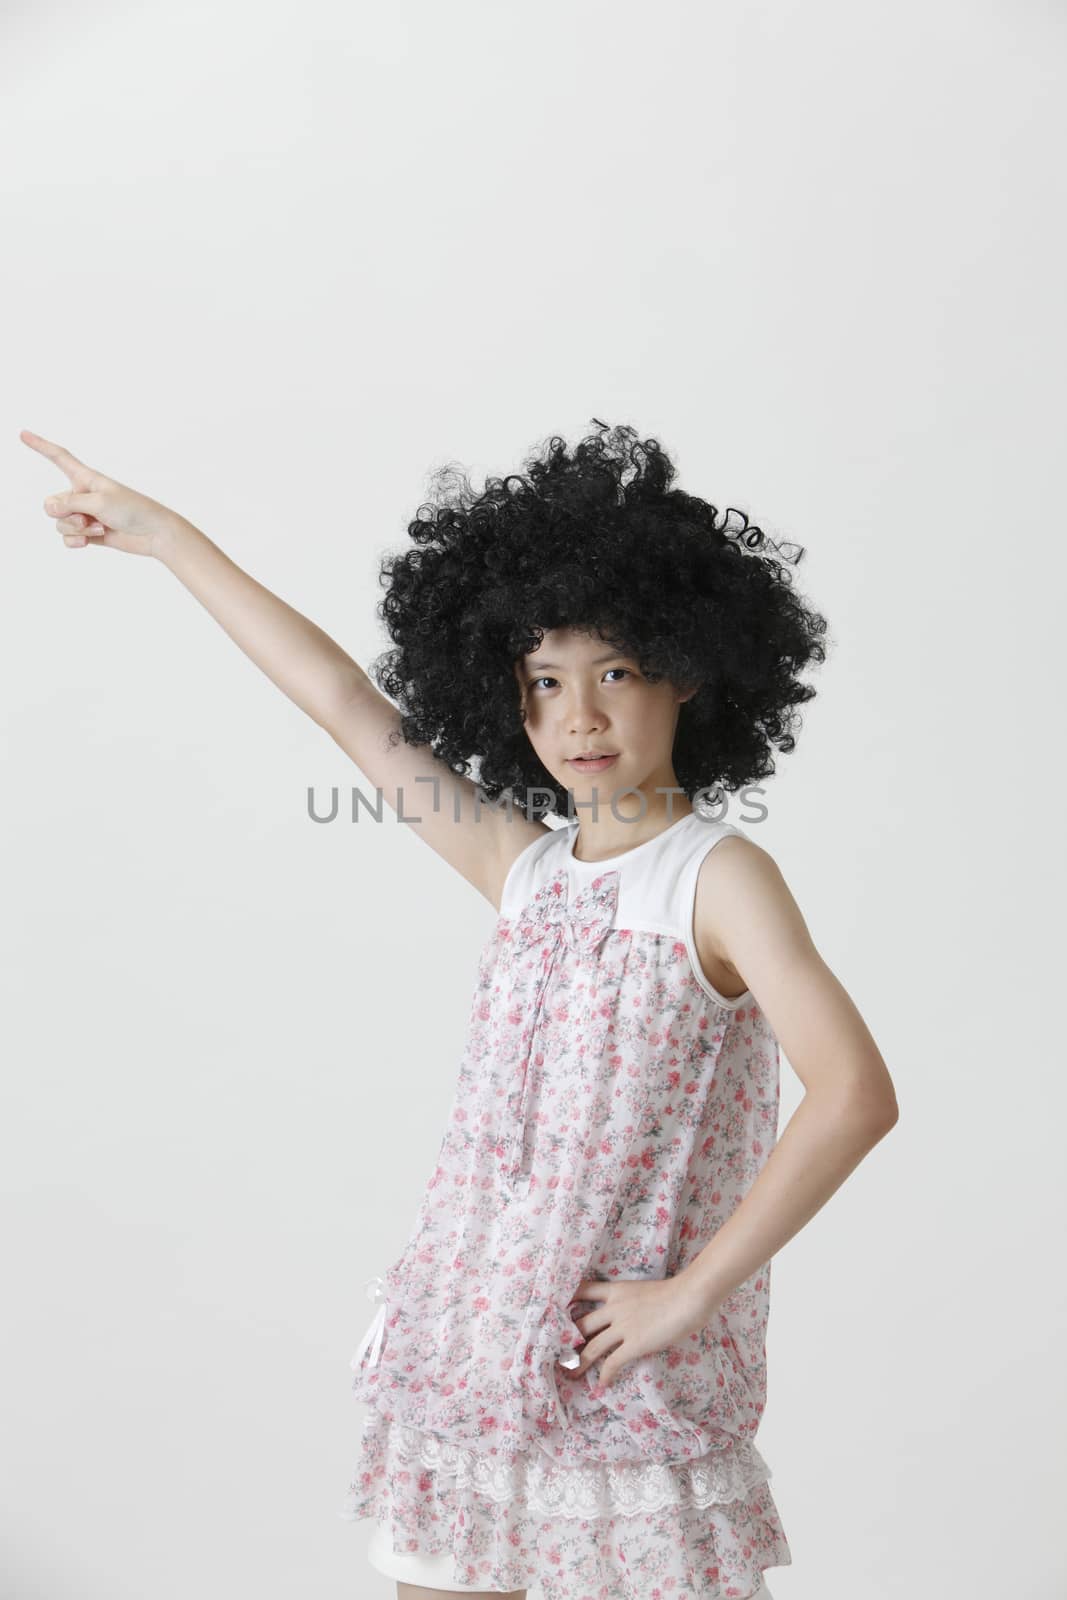 chinese girl wearing a big black wig dancing